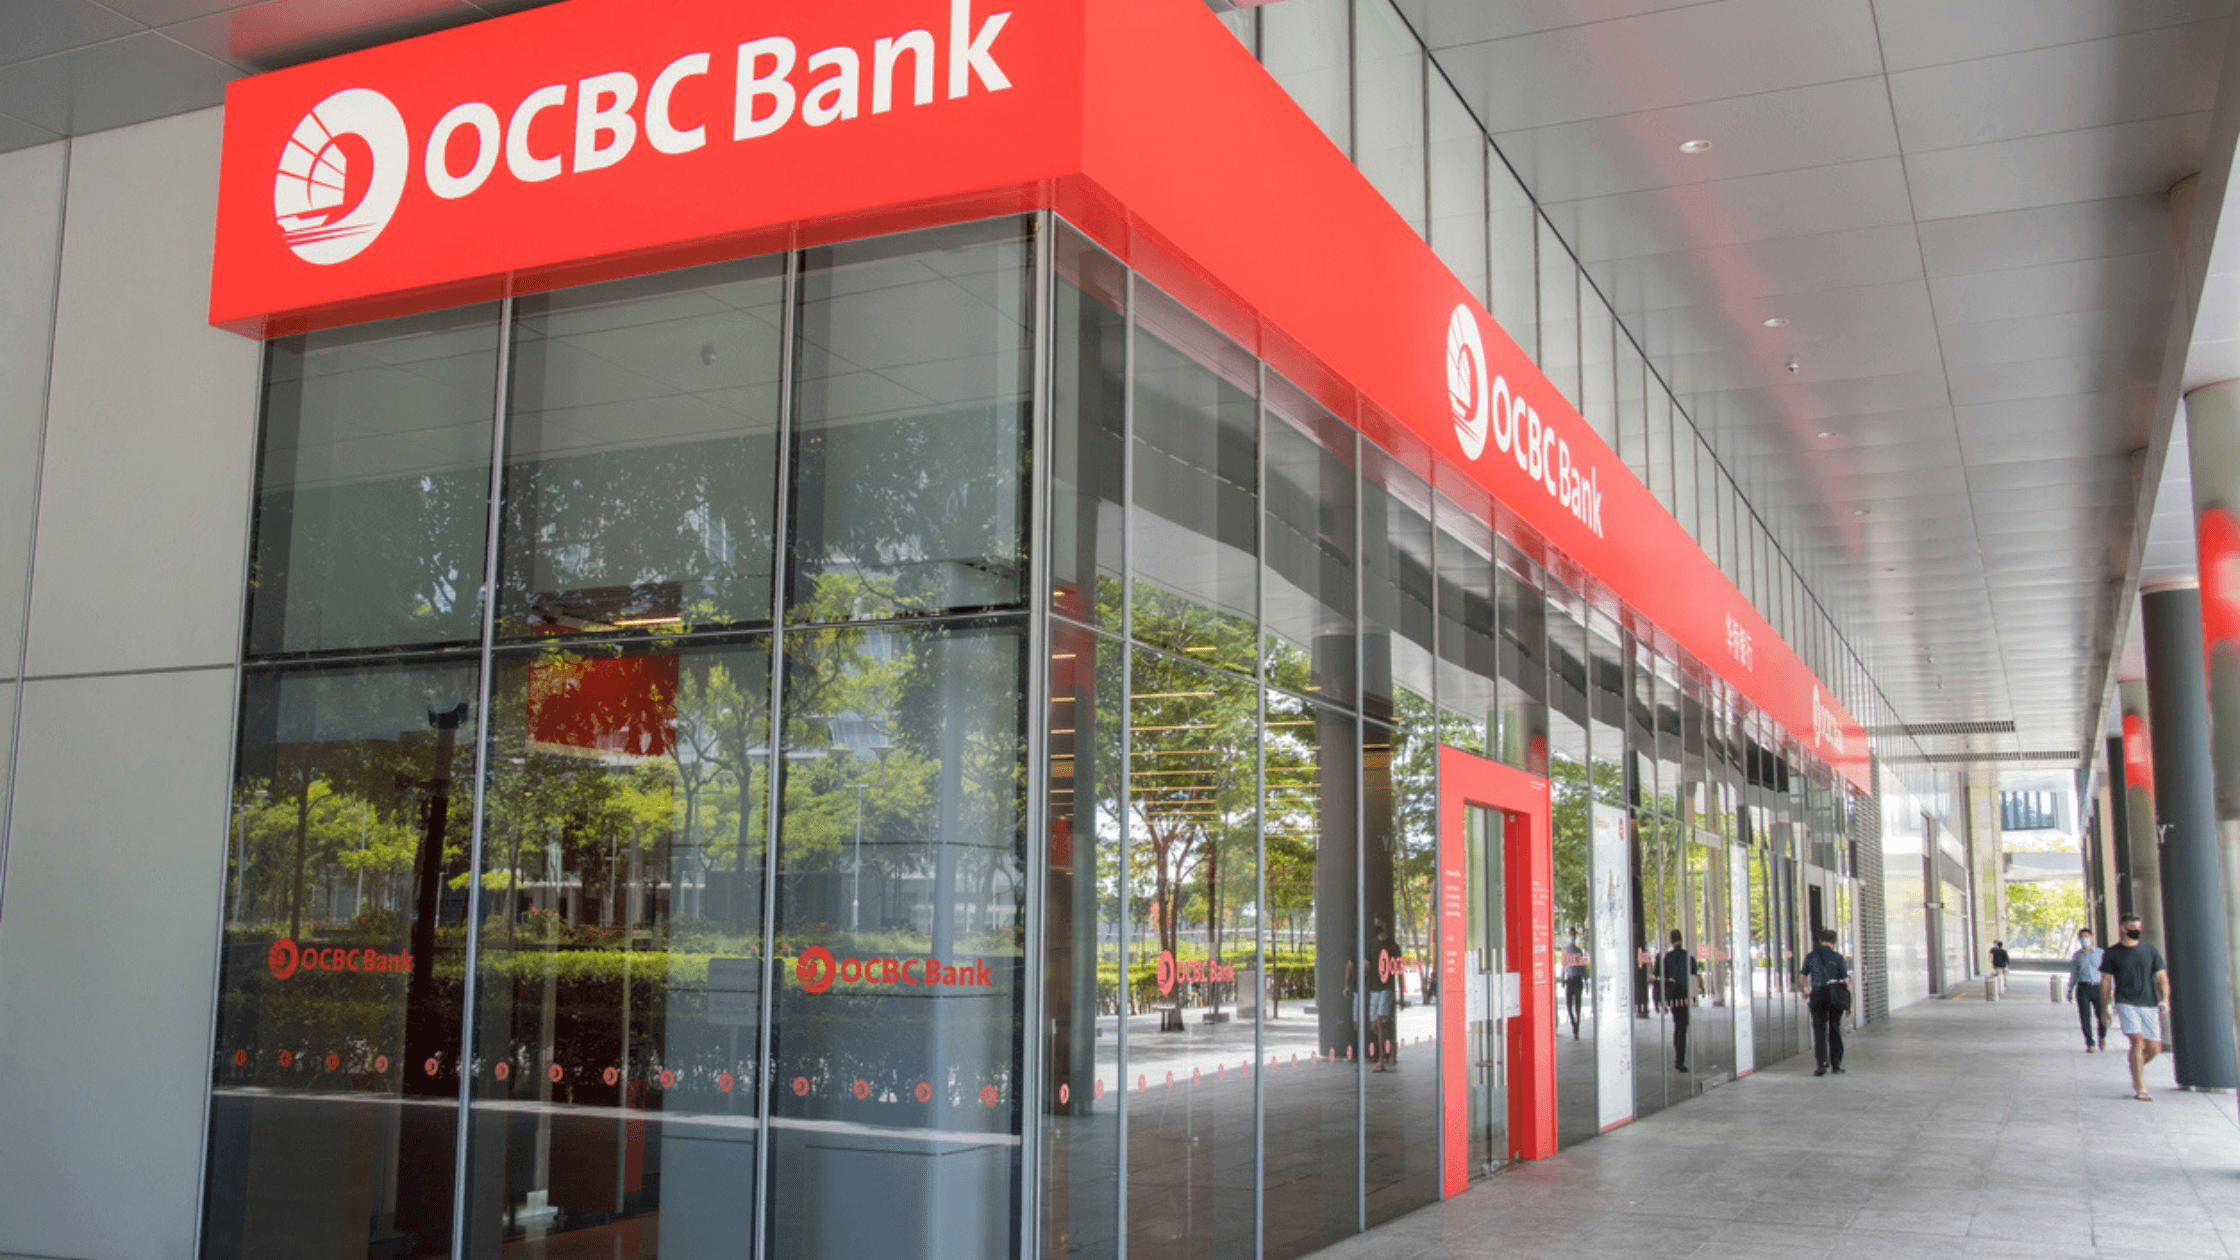 OCBC bank shares